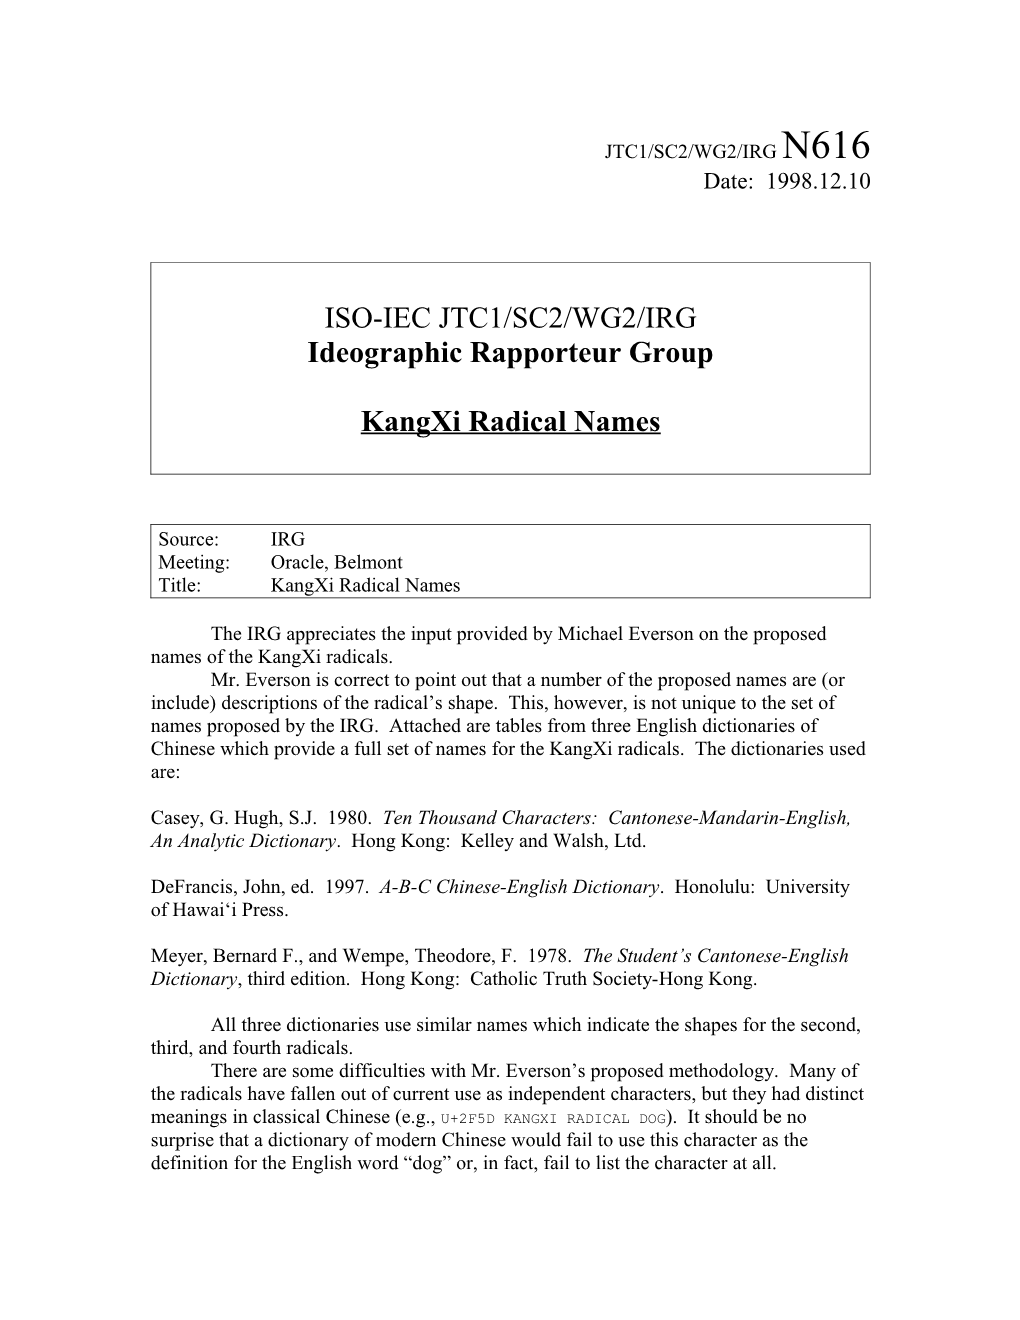 Ideographic Rapporteur Group